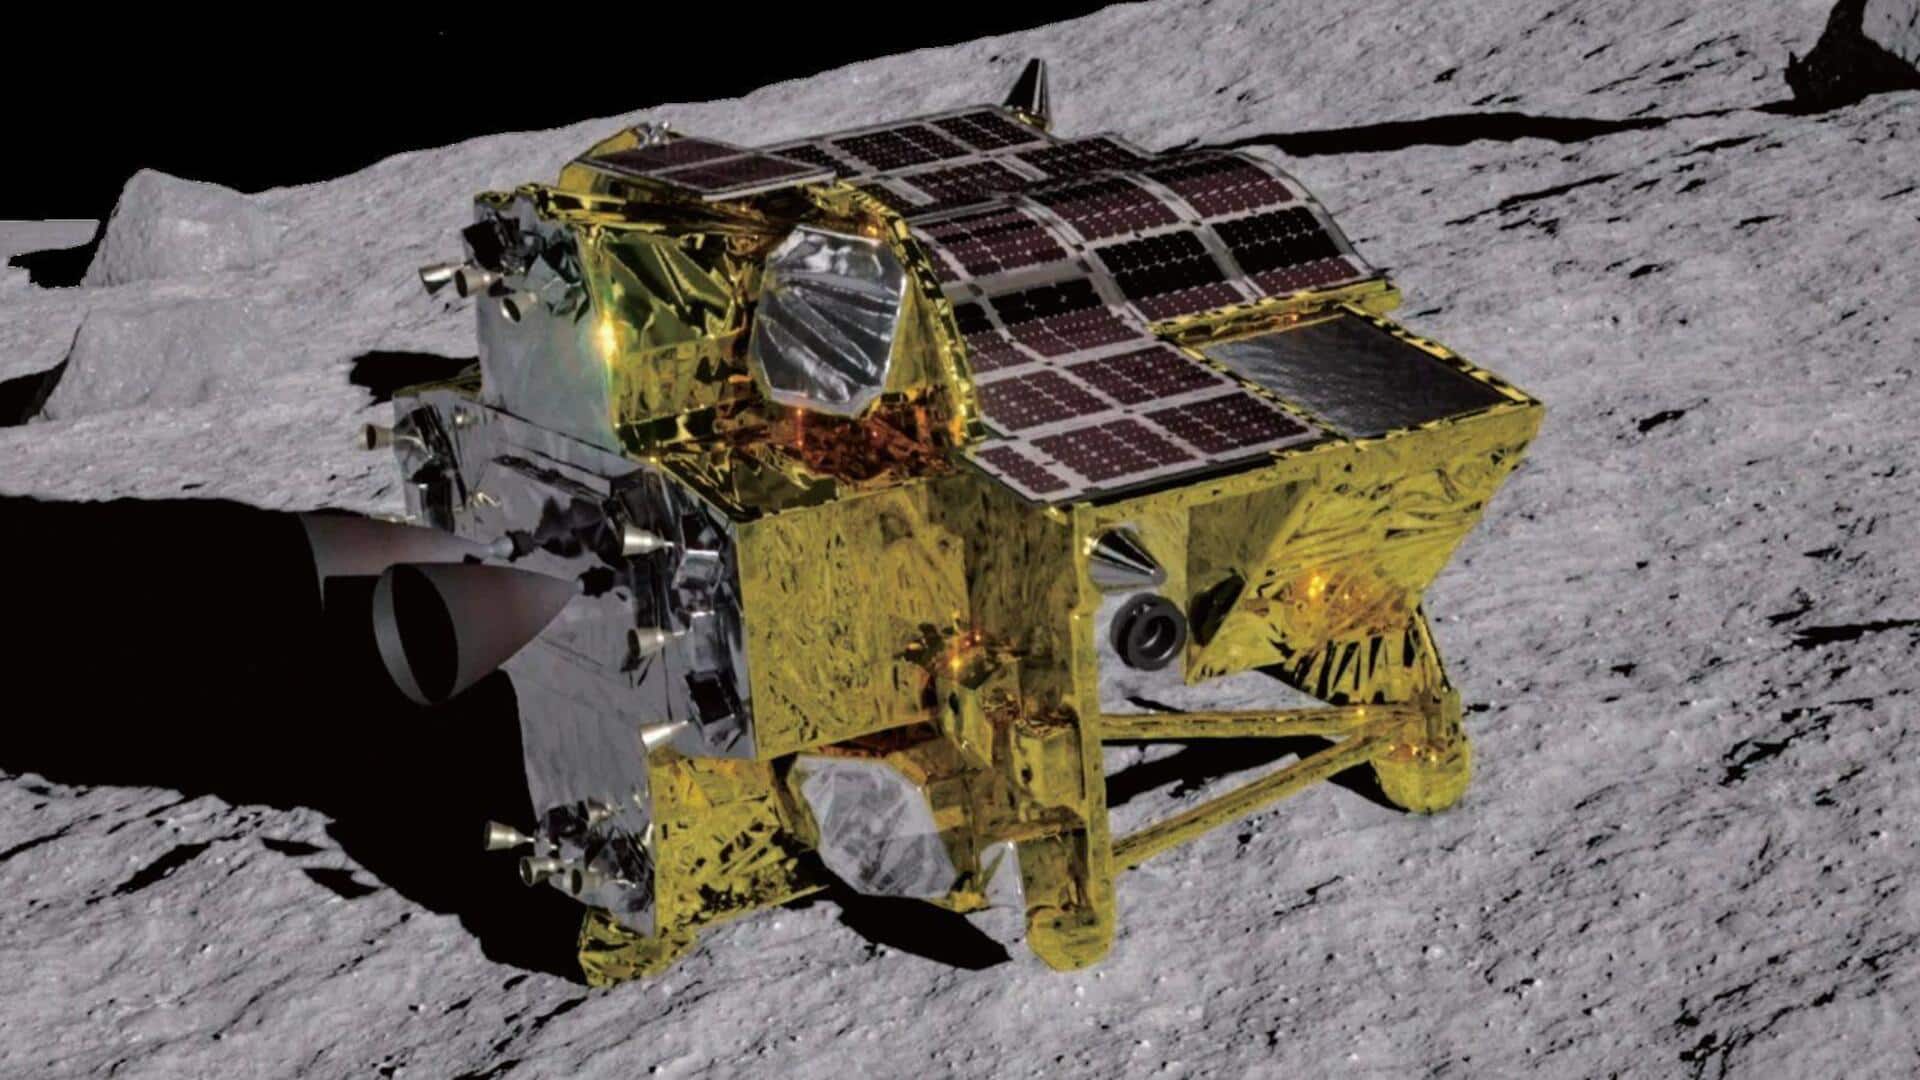 Japan's SLIM Moon lander resumes scientific operations following temporary shutdown